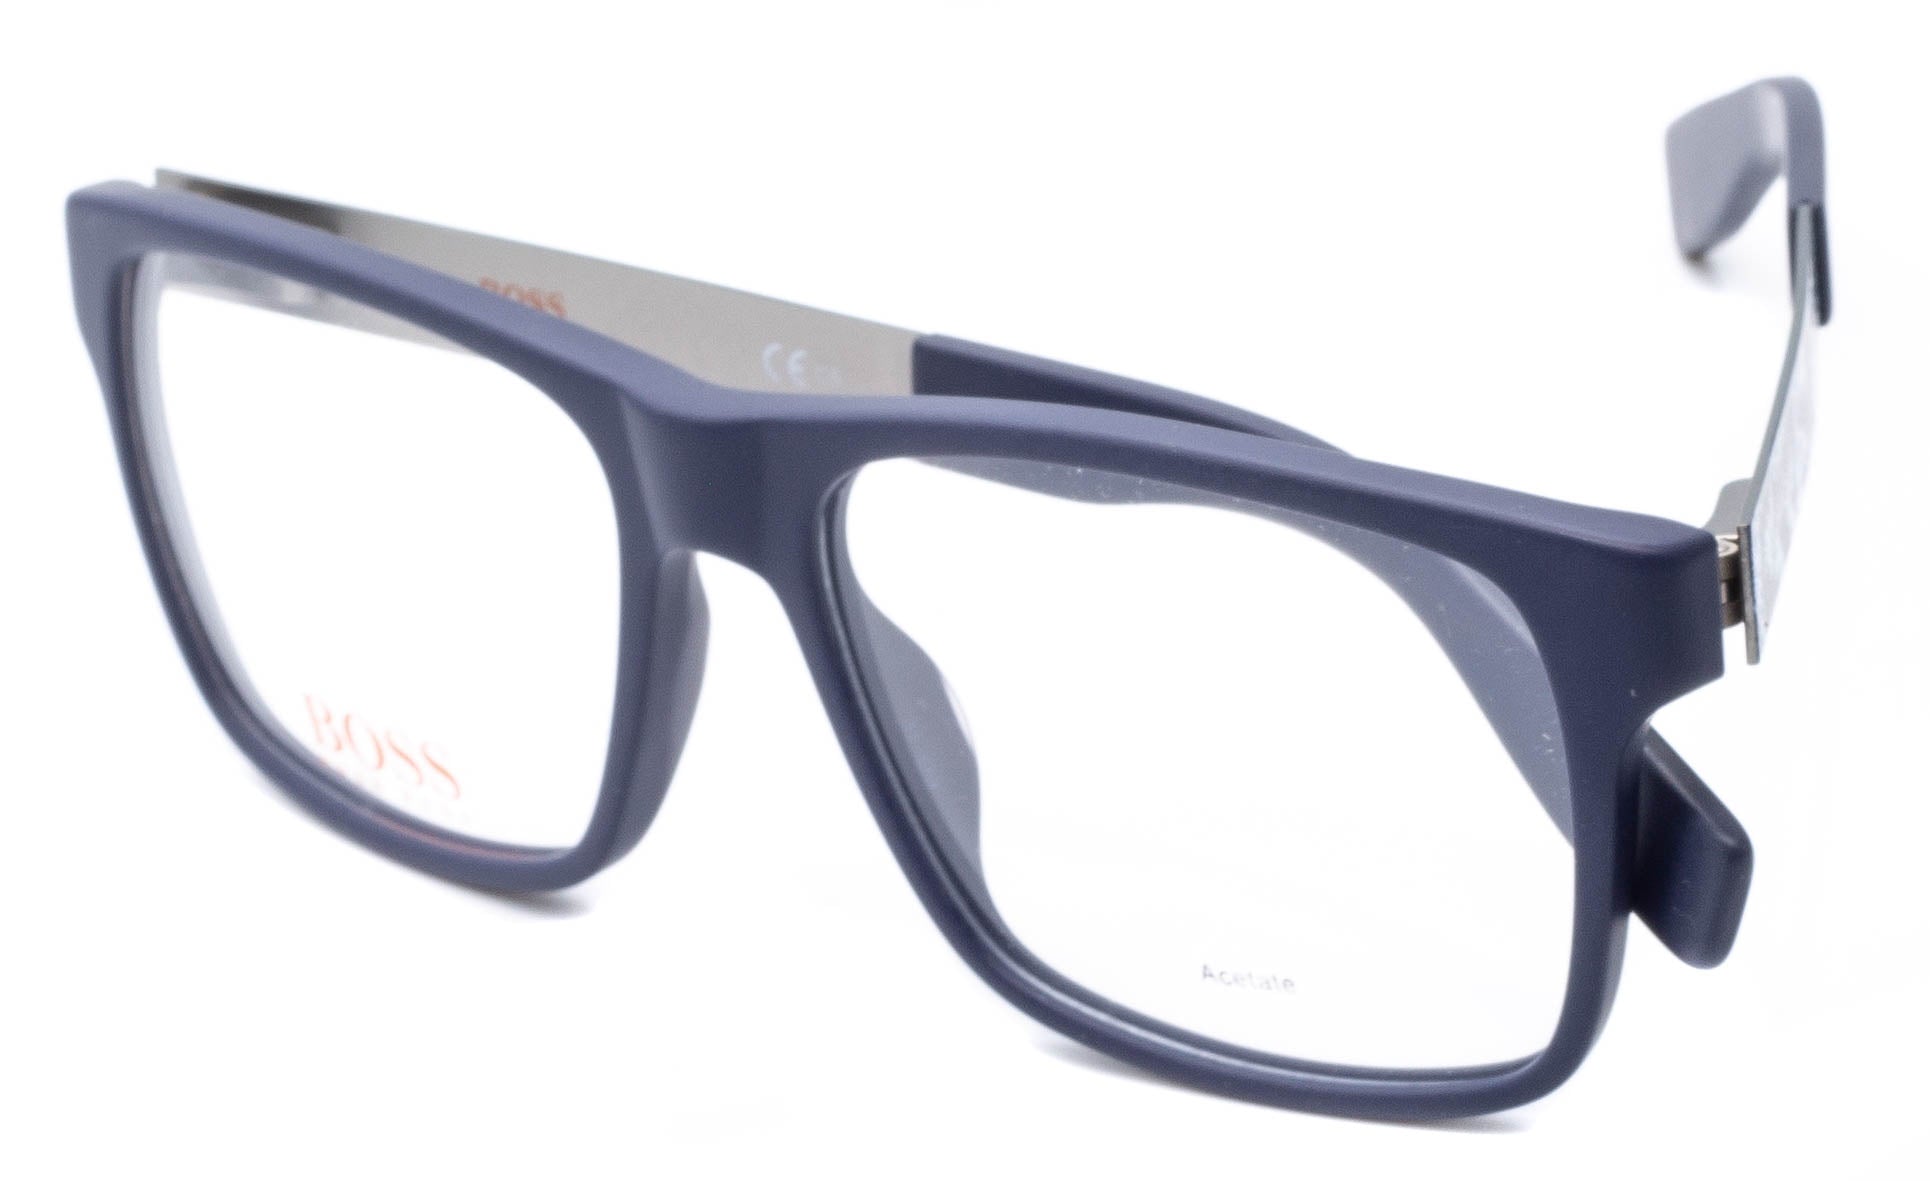 BOSS ORANGE BO 0203 54mm Eyewear FRAMES RX Optical Glasses New - GGV Eyewear